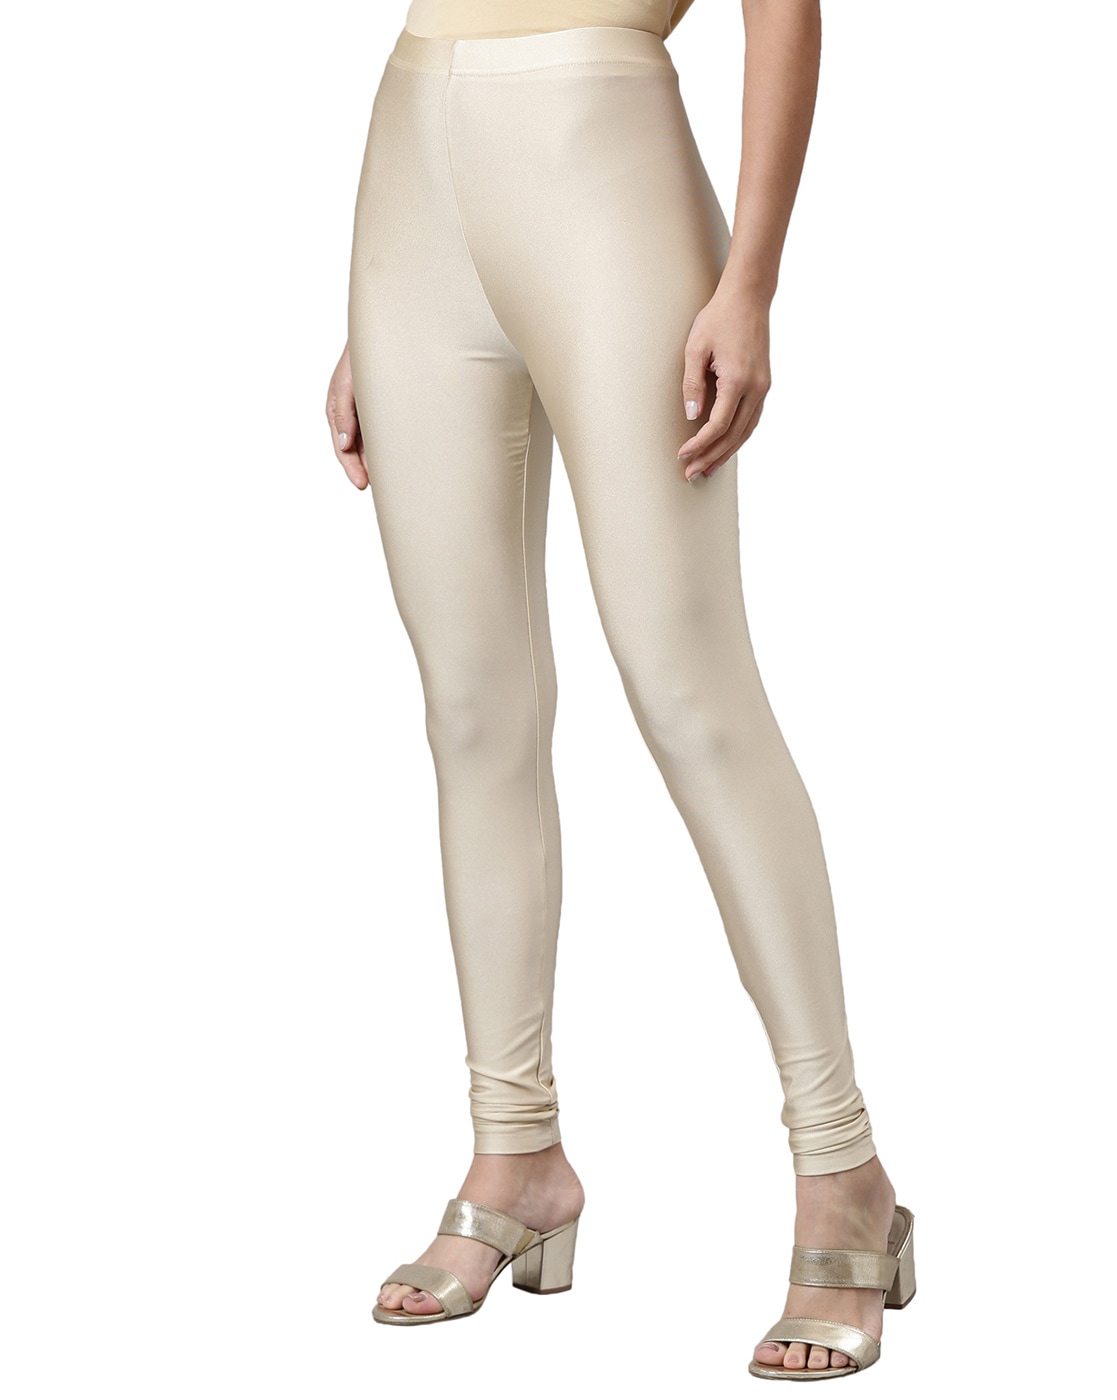 JoyLab Navy Blue Shimmer Gold Pull On Activewear Leggings Women's Size  Medium M | eBay